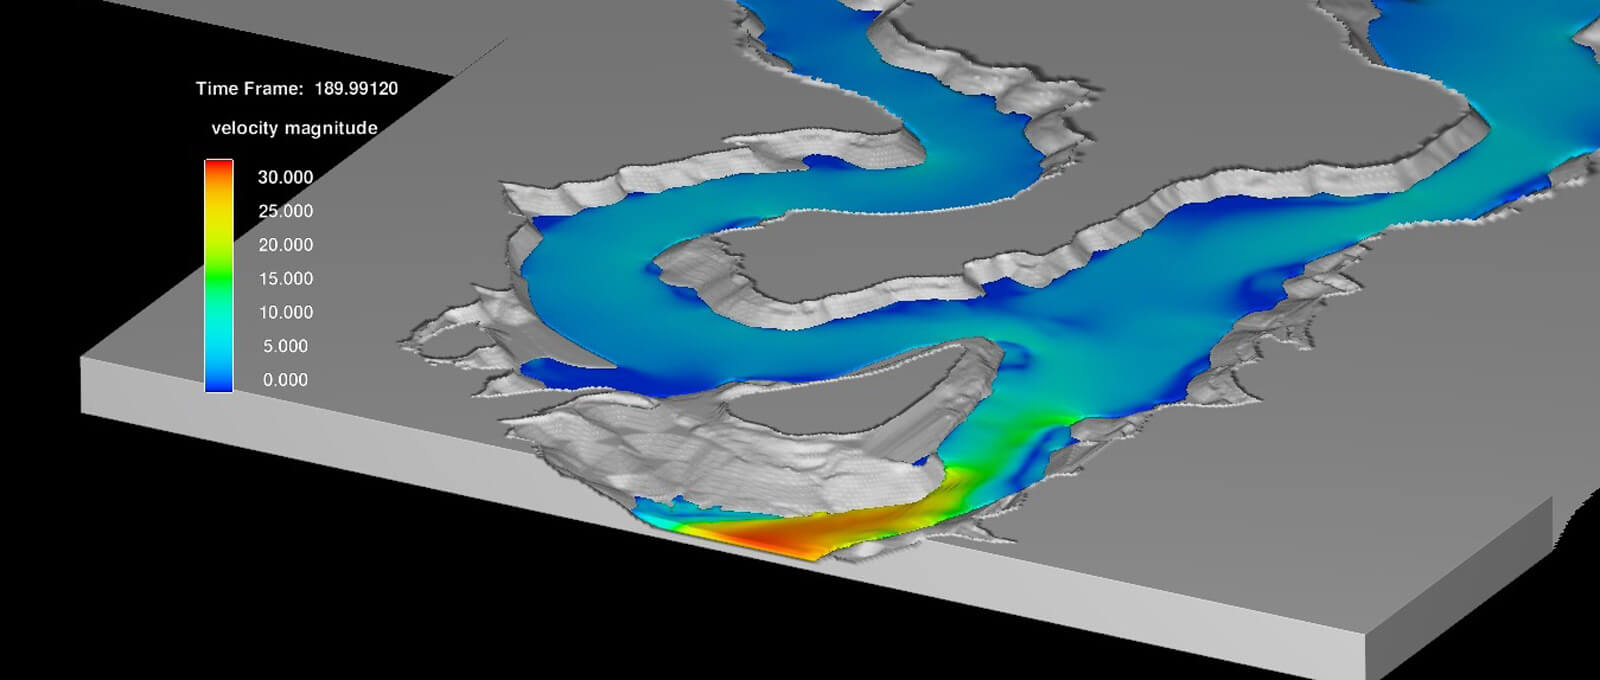 Dam Break and Flood Wave Generation - Simulation of Wave Generation and propagation under 3D fluid analysis